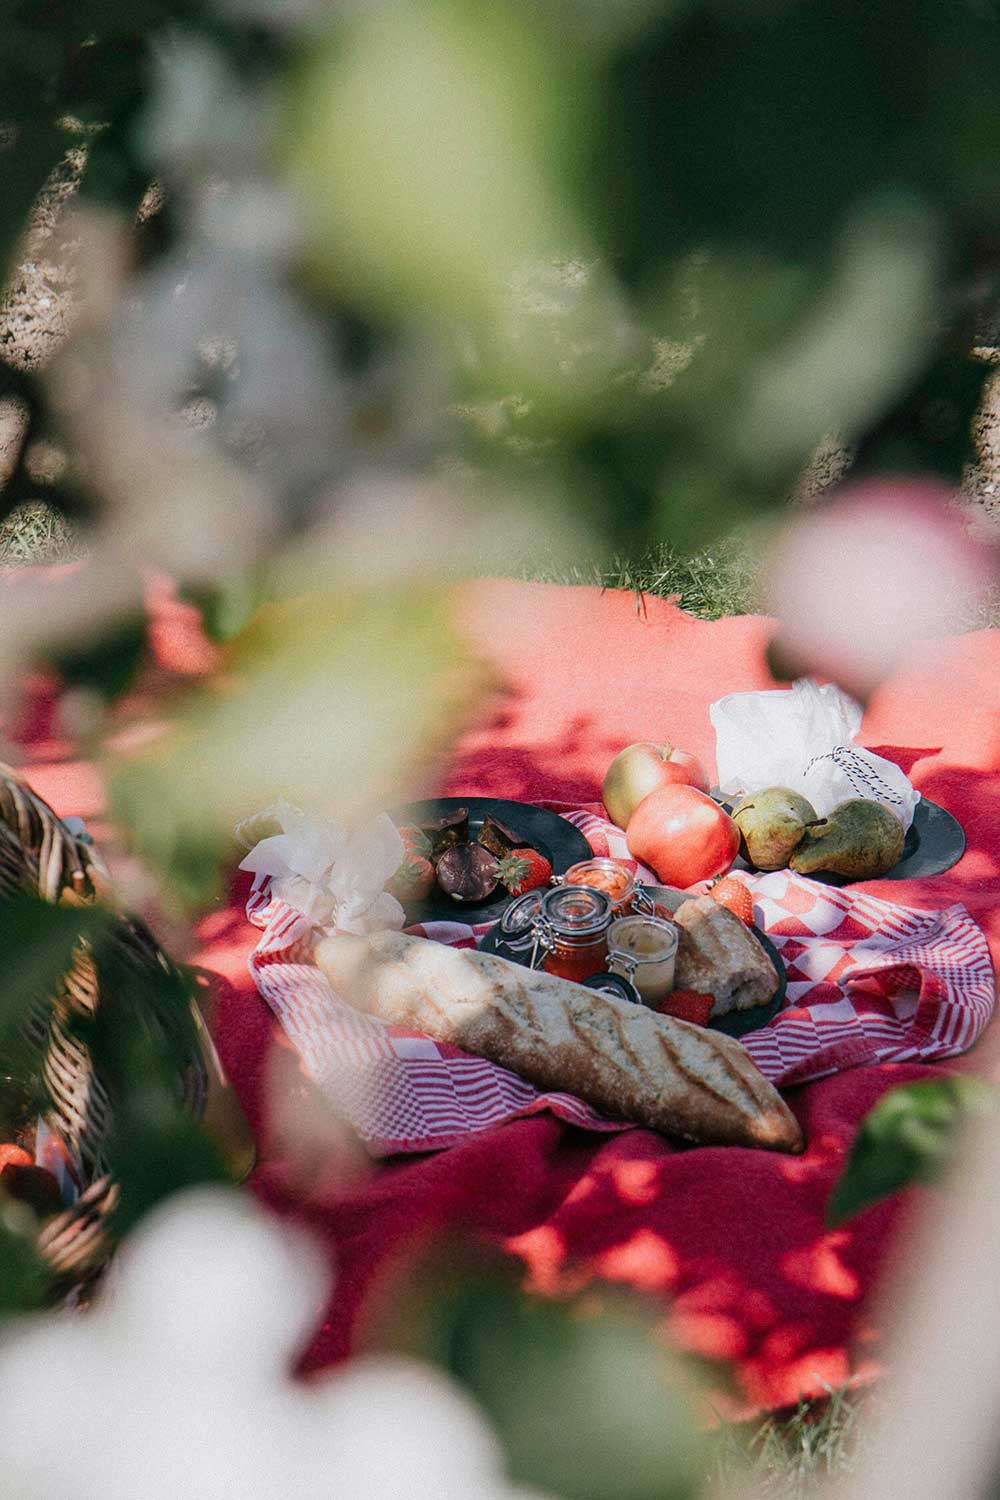 Picknicken tussen de bloesems in Borgloon